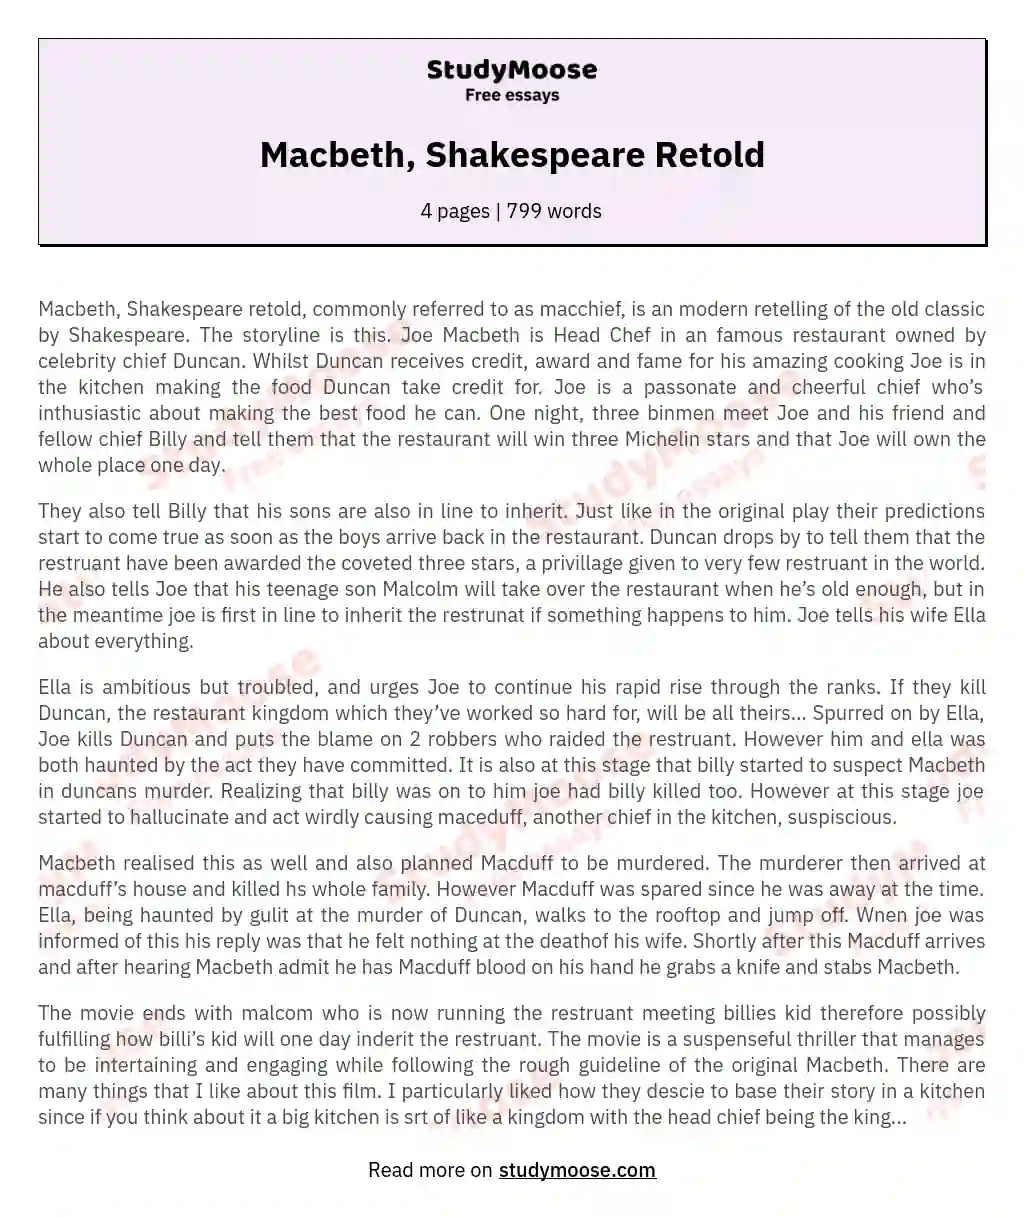 Macbeth, Shakespeare Retold essay